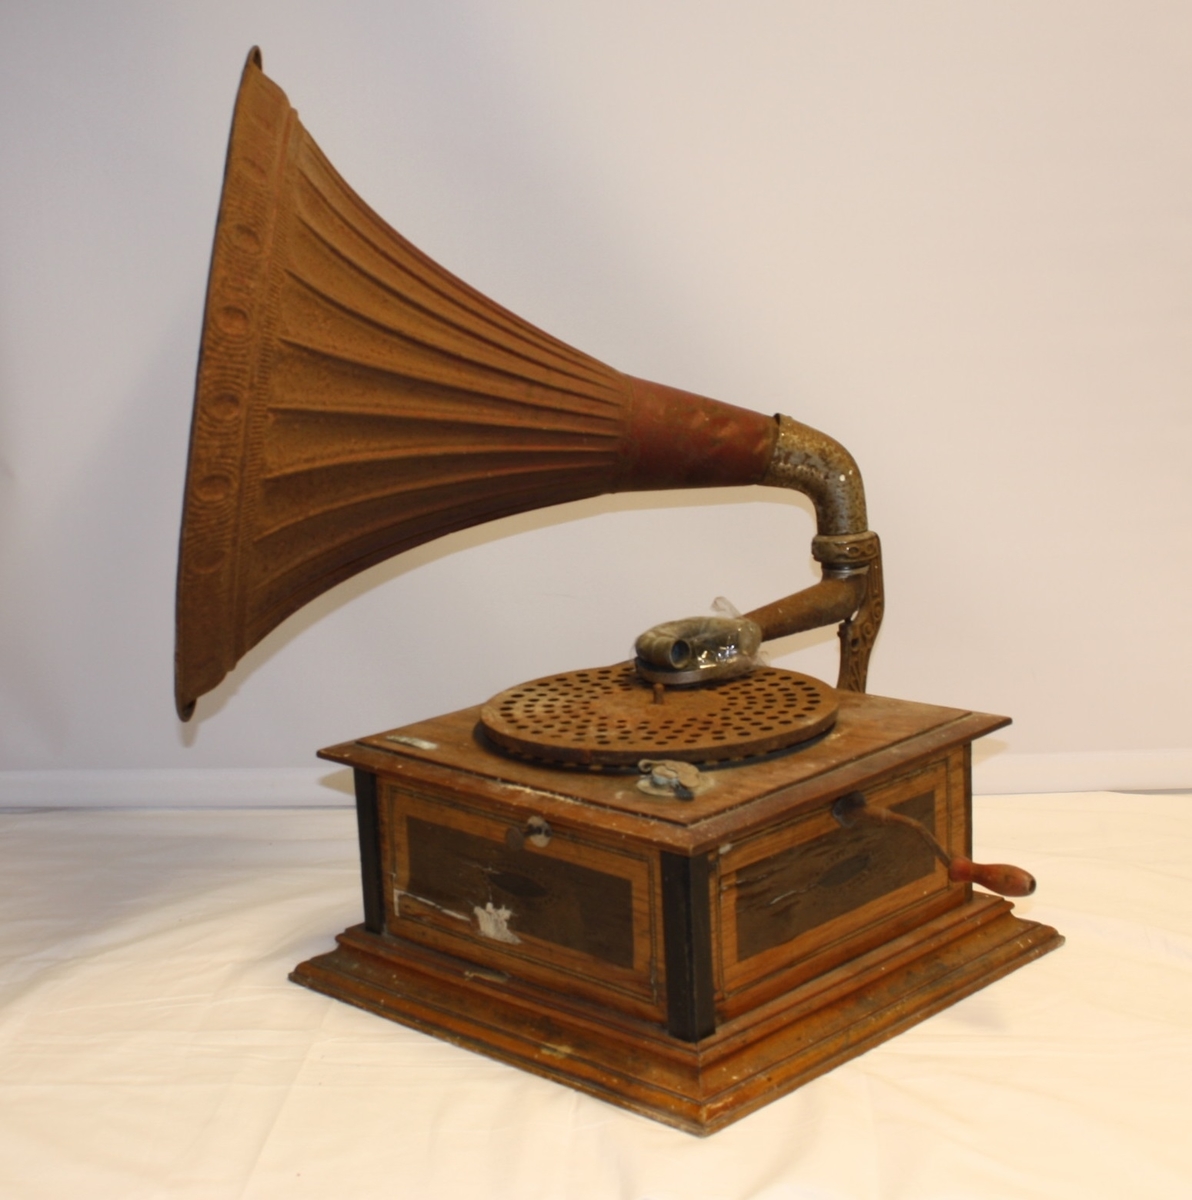 Rektangulær grammofon med sveiv, rund platetallerk og traktforma høgtalar.